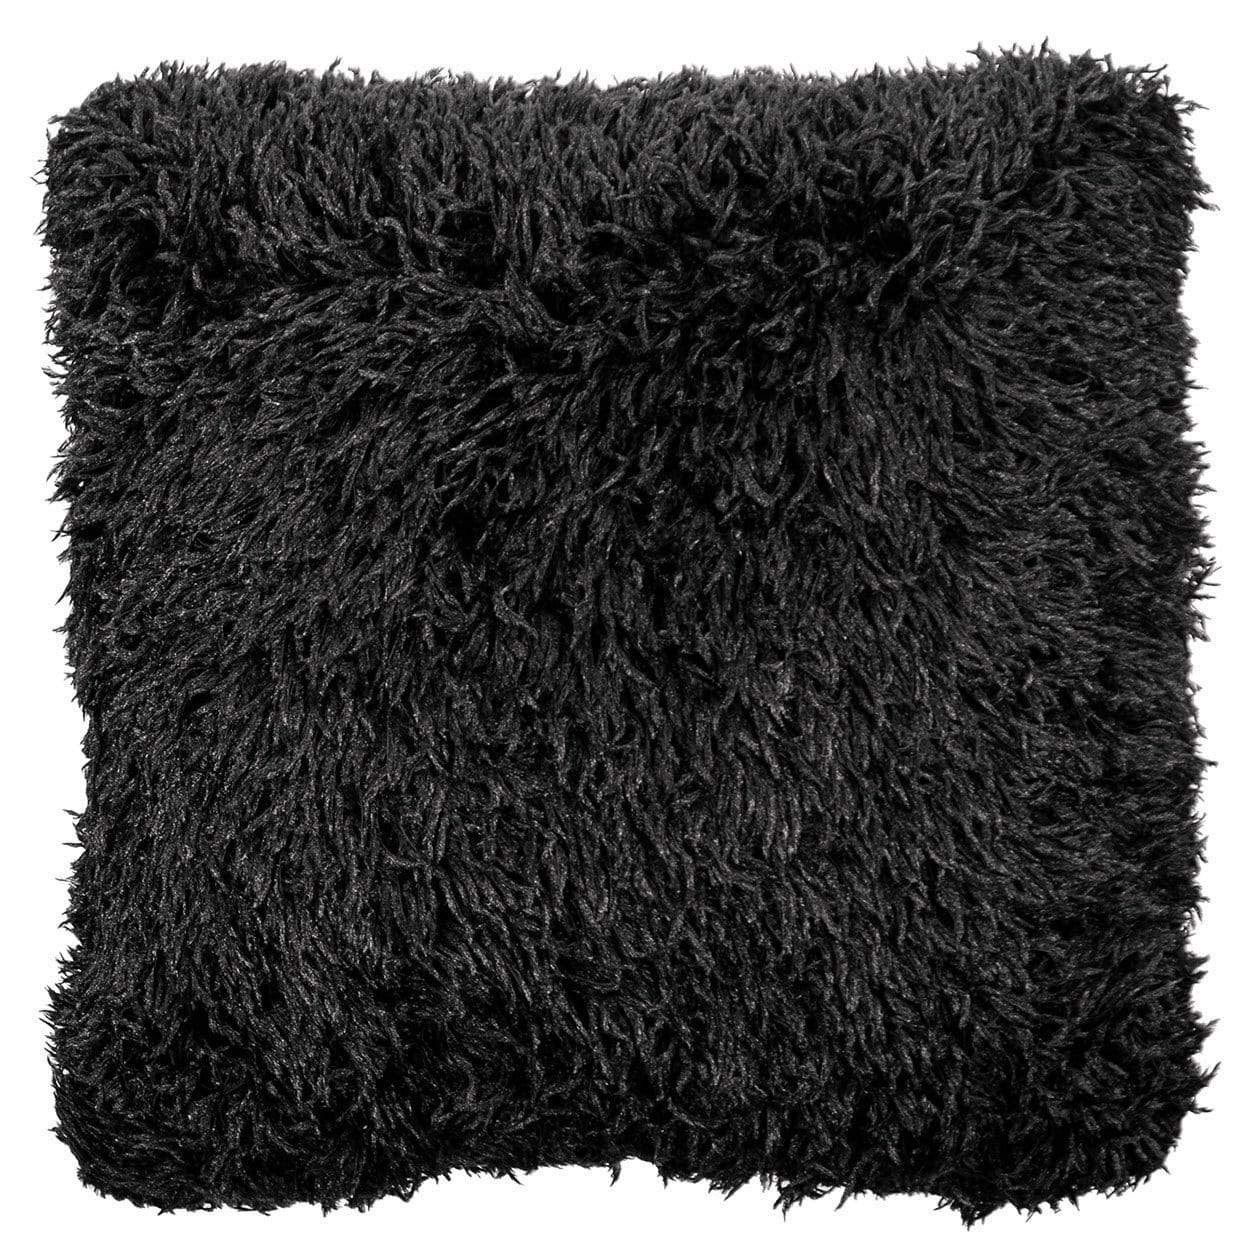 Pandemonium Millinery Pillow Sham - Black Swan Faux Fur 16" Square / Add Pillow Form / Black Swan Home decor